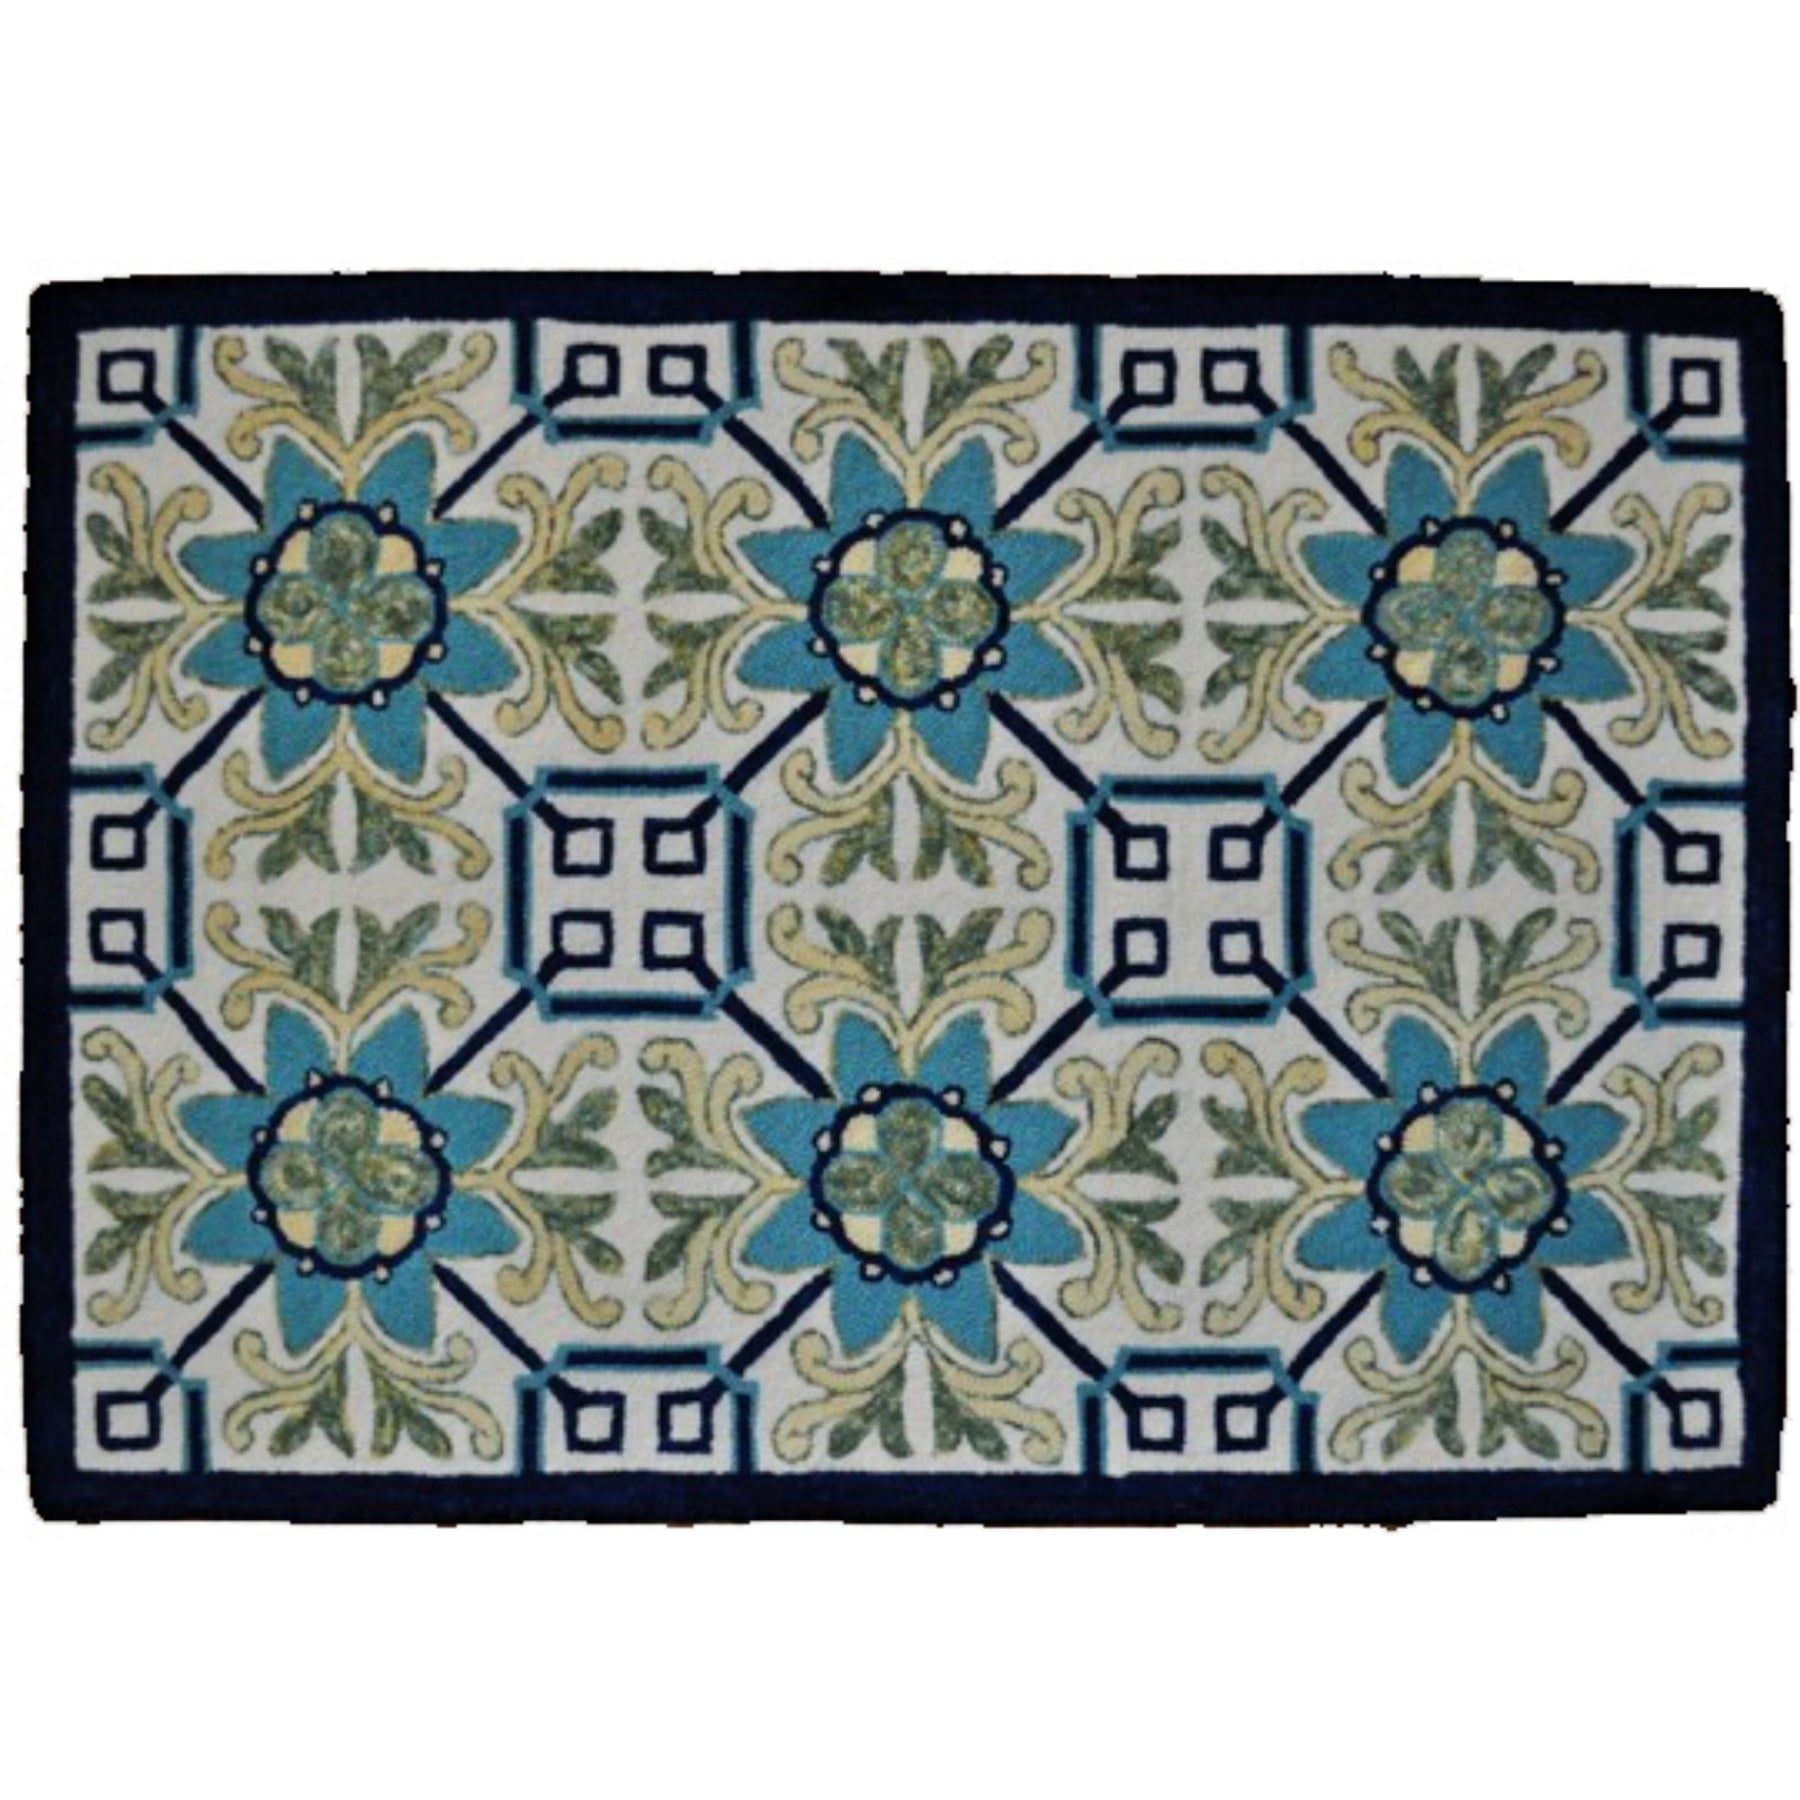 St. Augustine, rug hooked by Karen Krepps